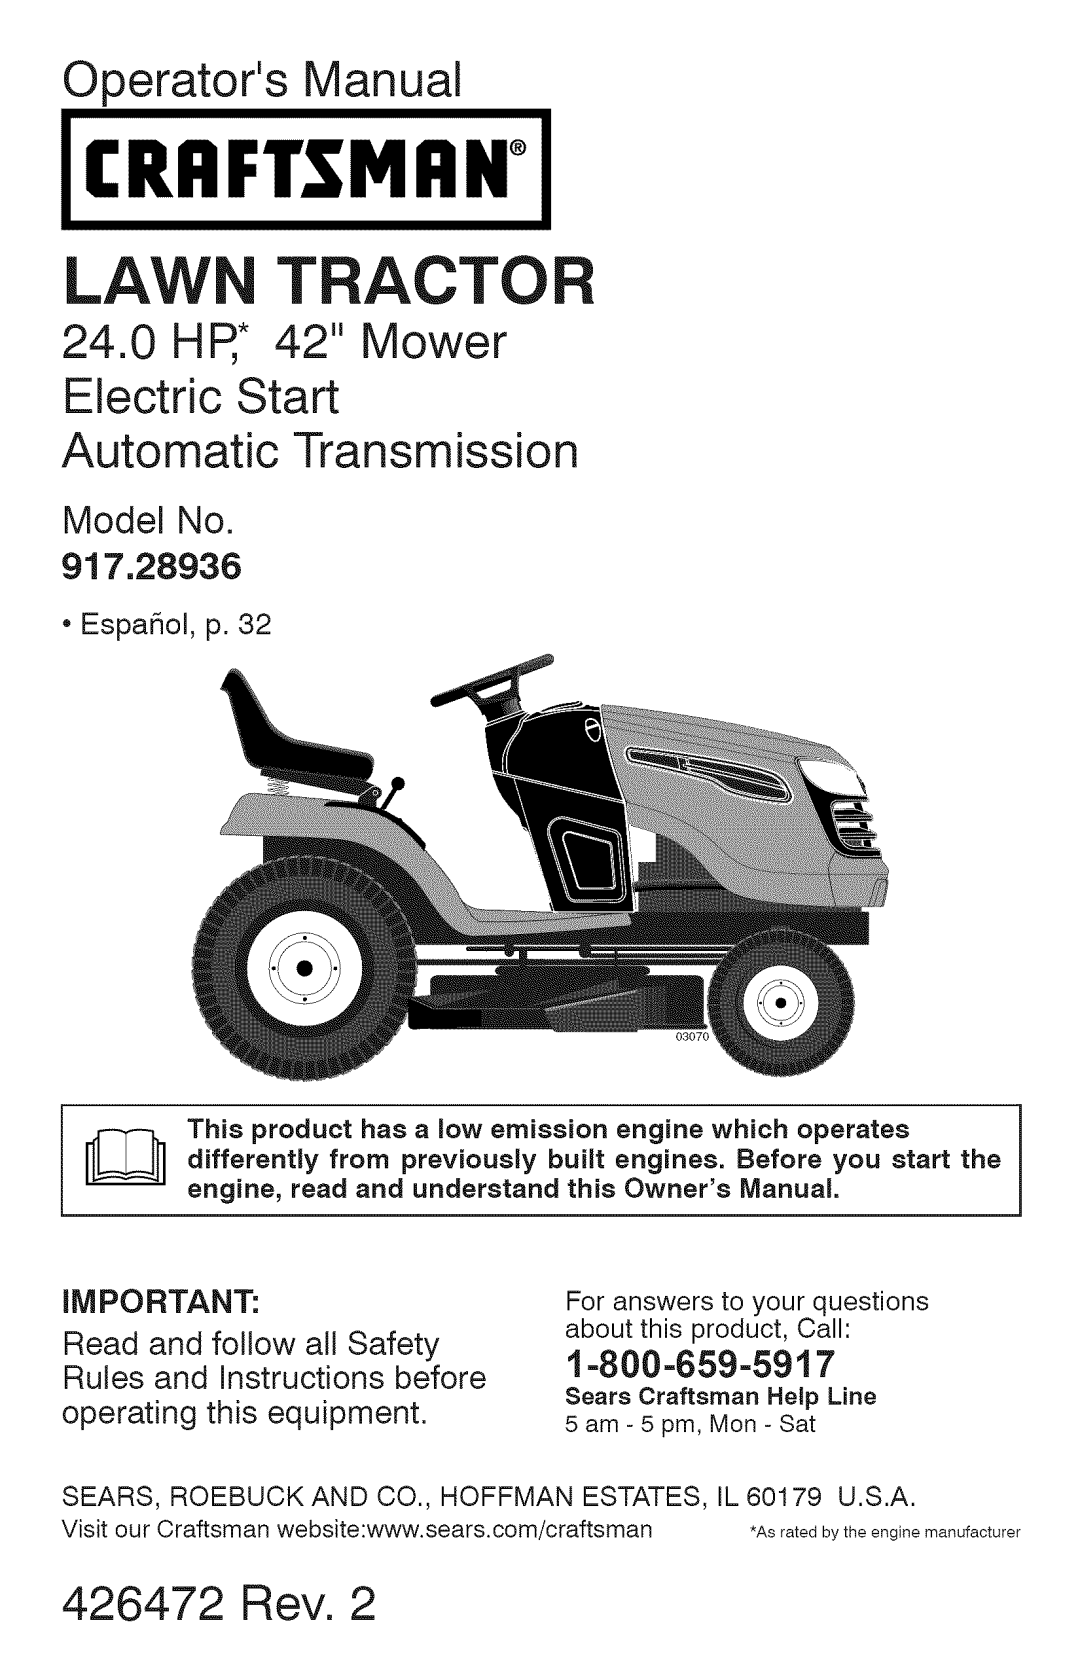 Craftsman 917.28936, YT 4000 owner manual Law Tractor, Operators Manual, Craftsman, 426472 Rev, operating this equipment 